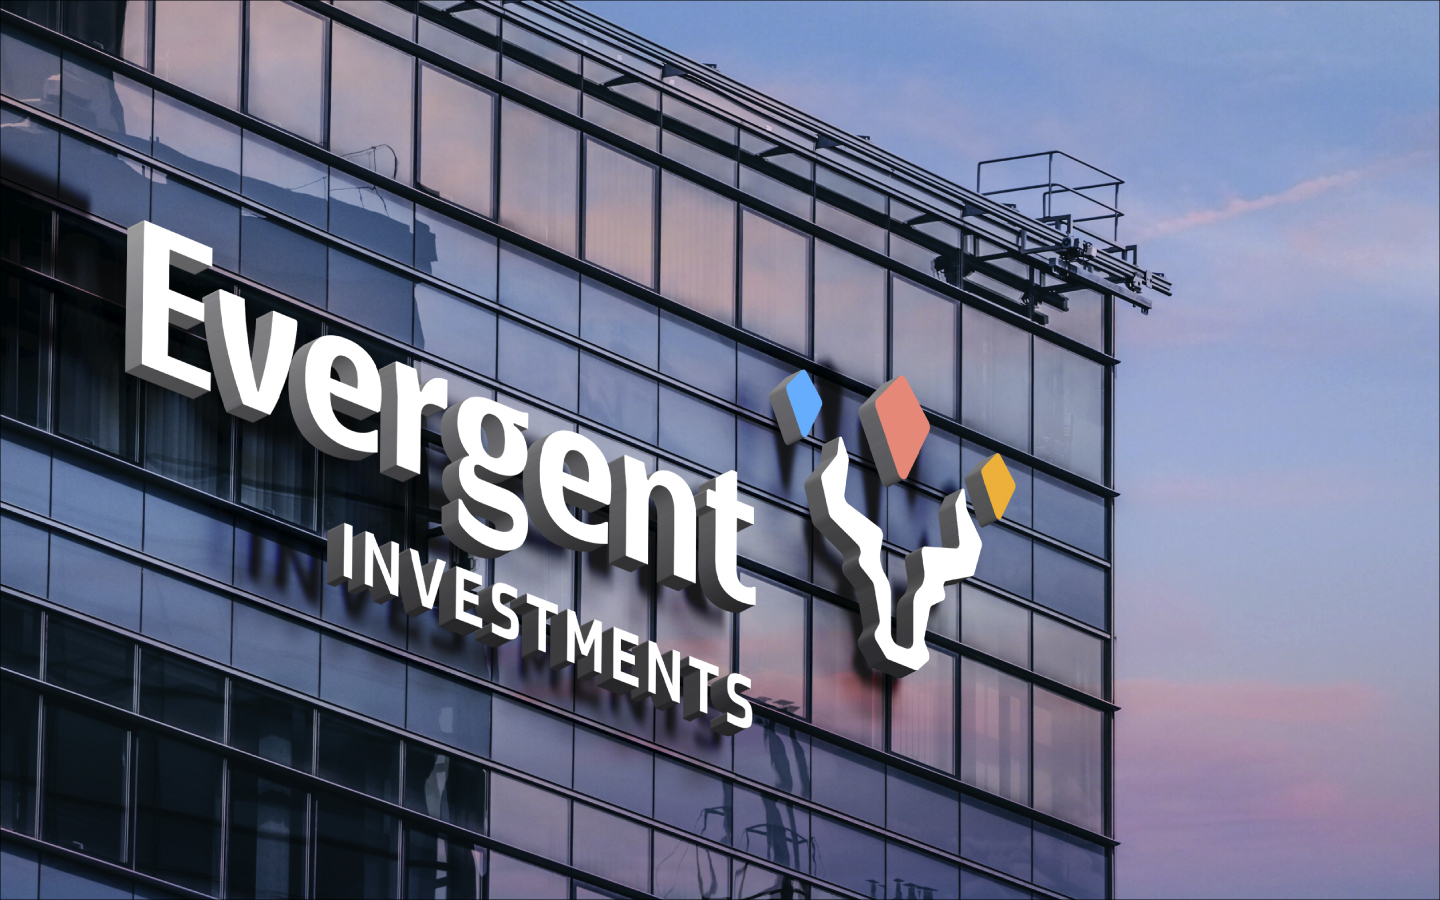 (P) EVERGENT Investments raporteaza o crestere cu 11,1% a valorii totale a activelor la 31 martie 2022 fata de 31 martie 2021